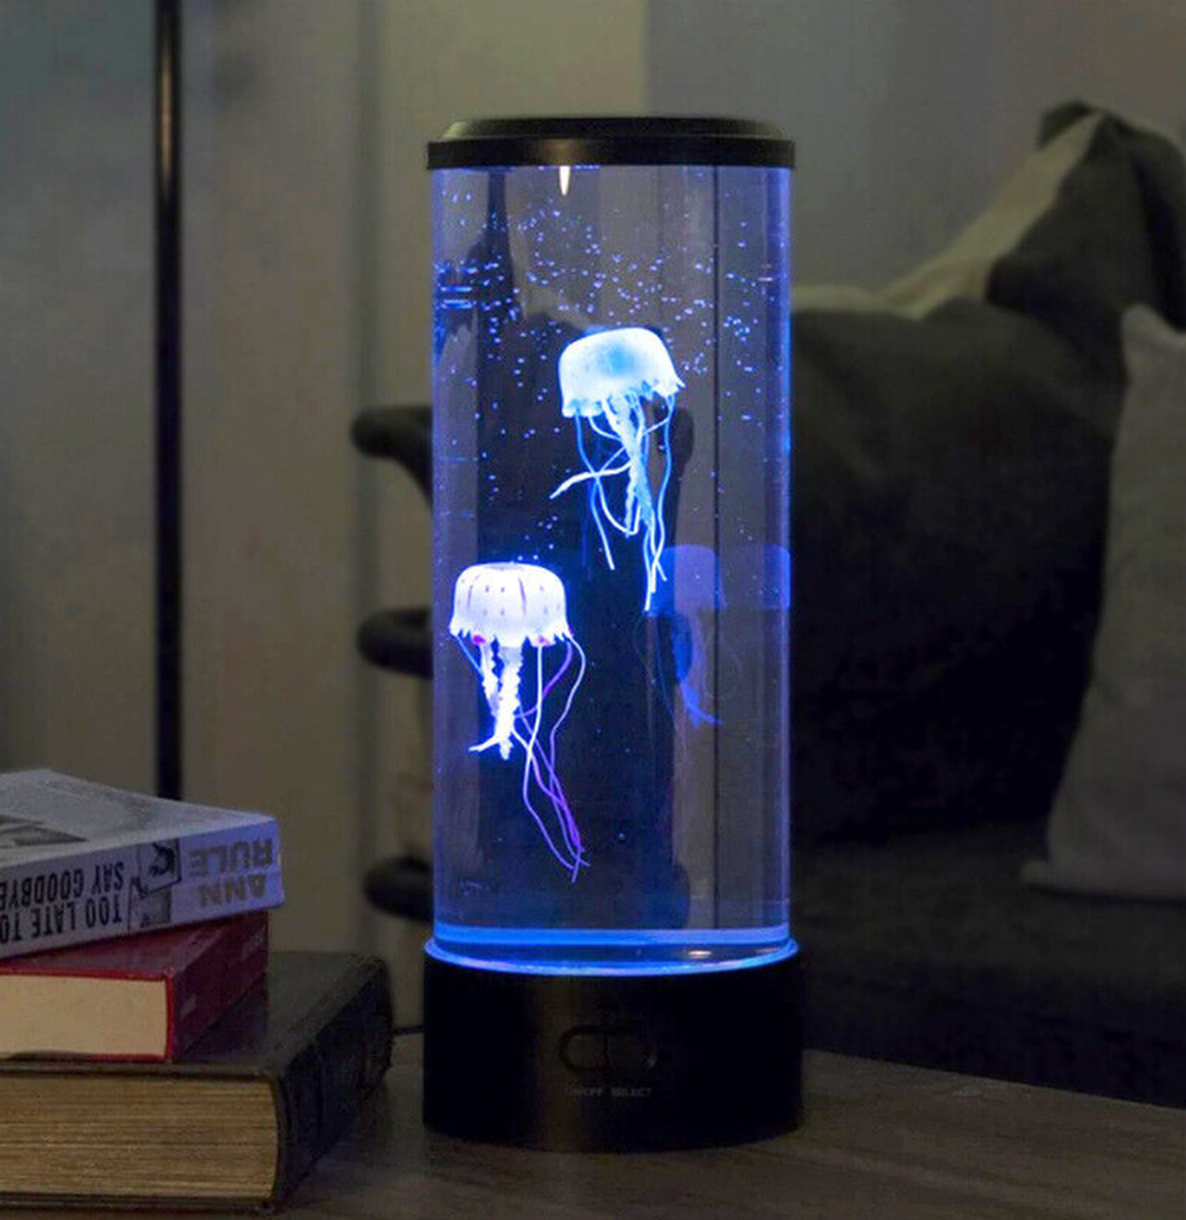 Illuminate Your Imagination: Unleash Creativity with Our BioLumi Jellyfish Mood Lamp!